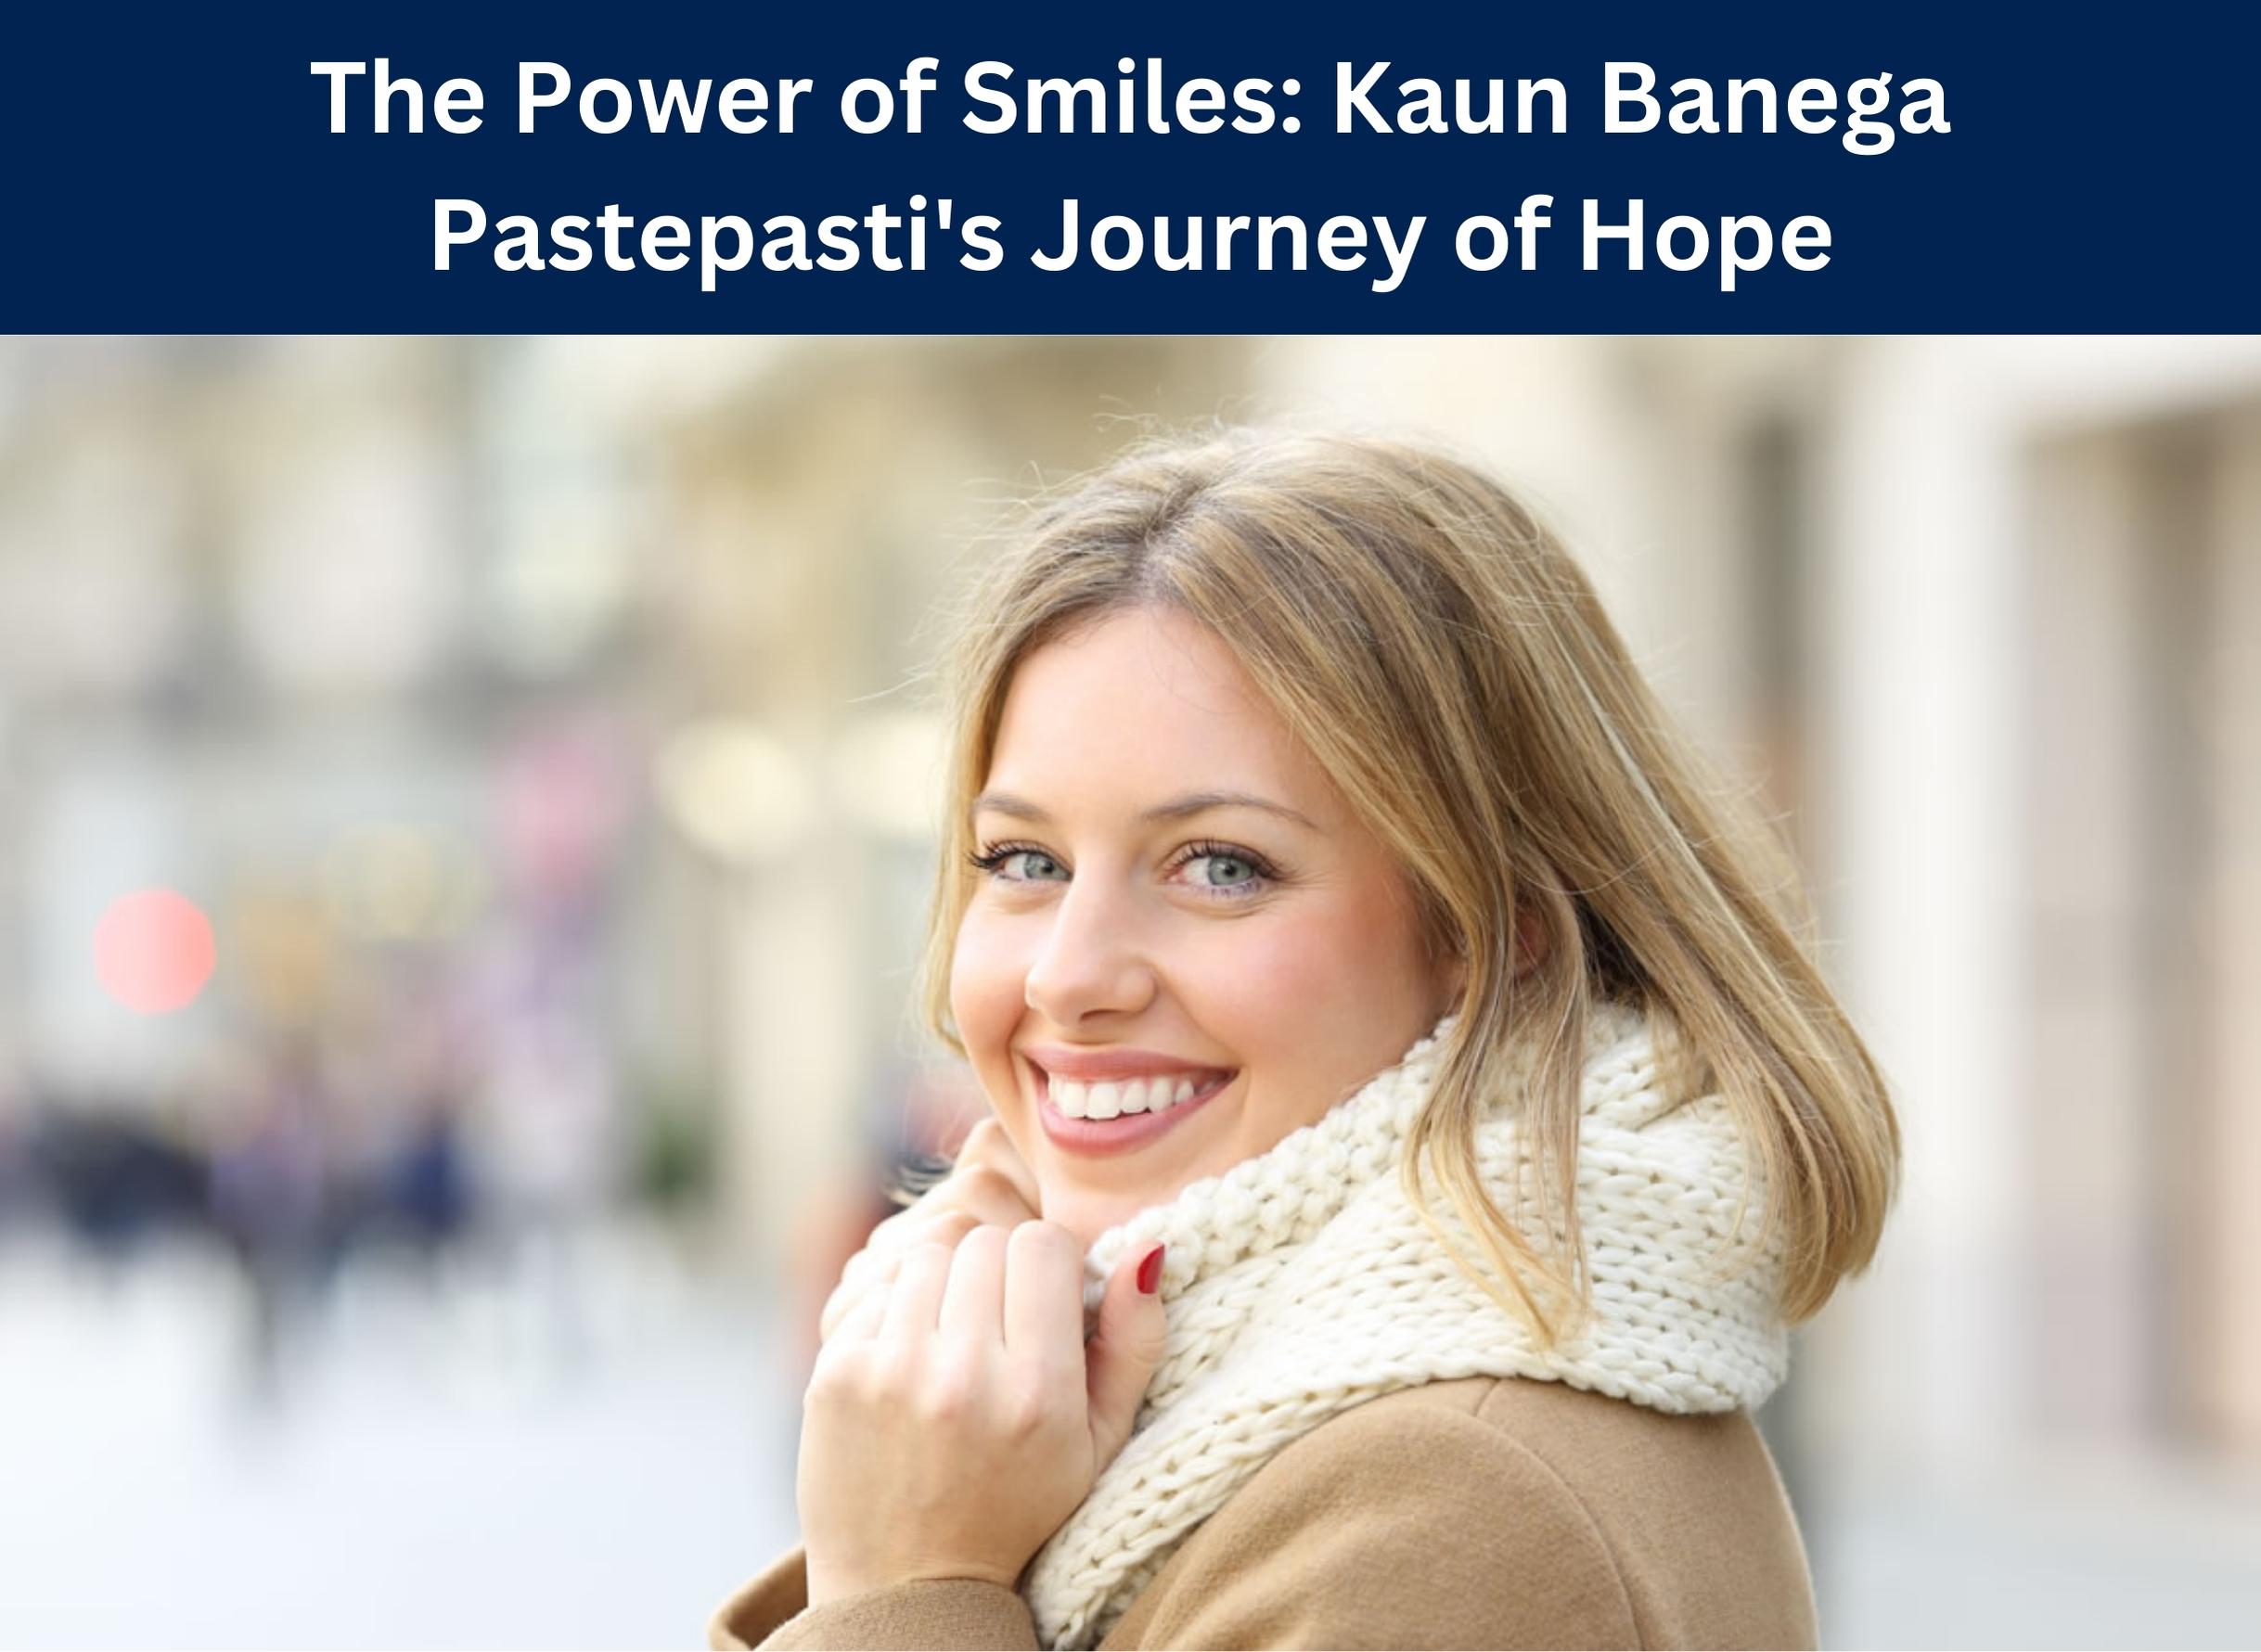 The Power of Smiles: Kaun Banega Pastepasti’s Journey of Hope